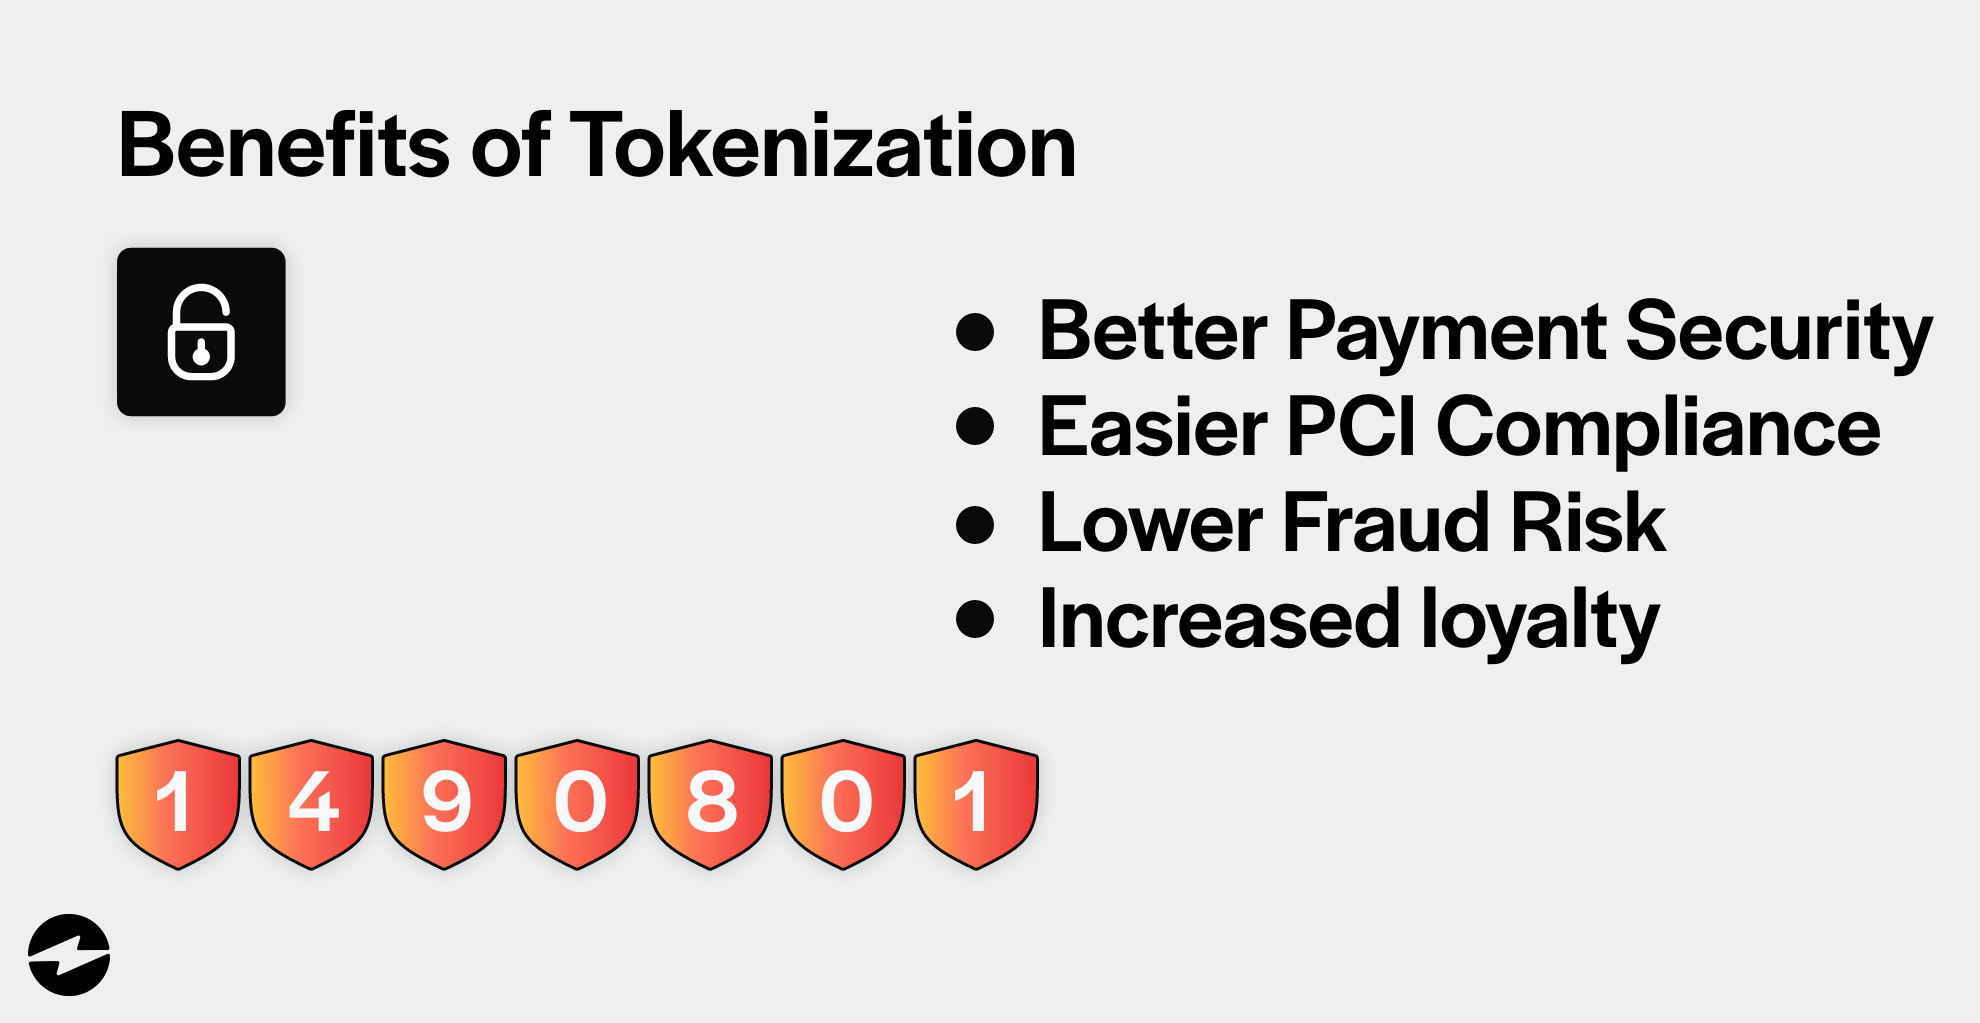 Benefits of Tokenization